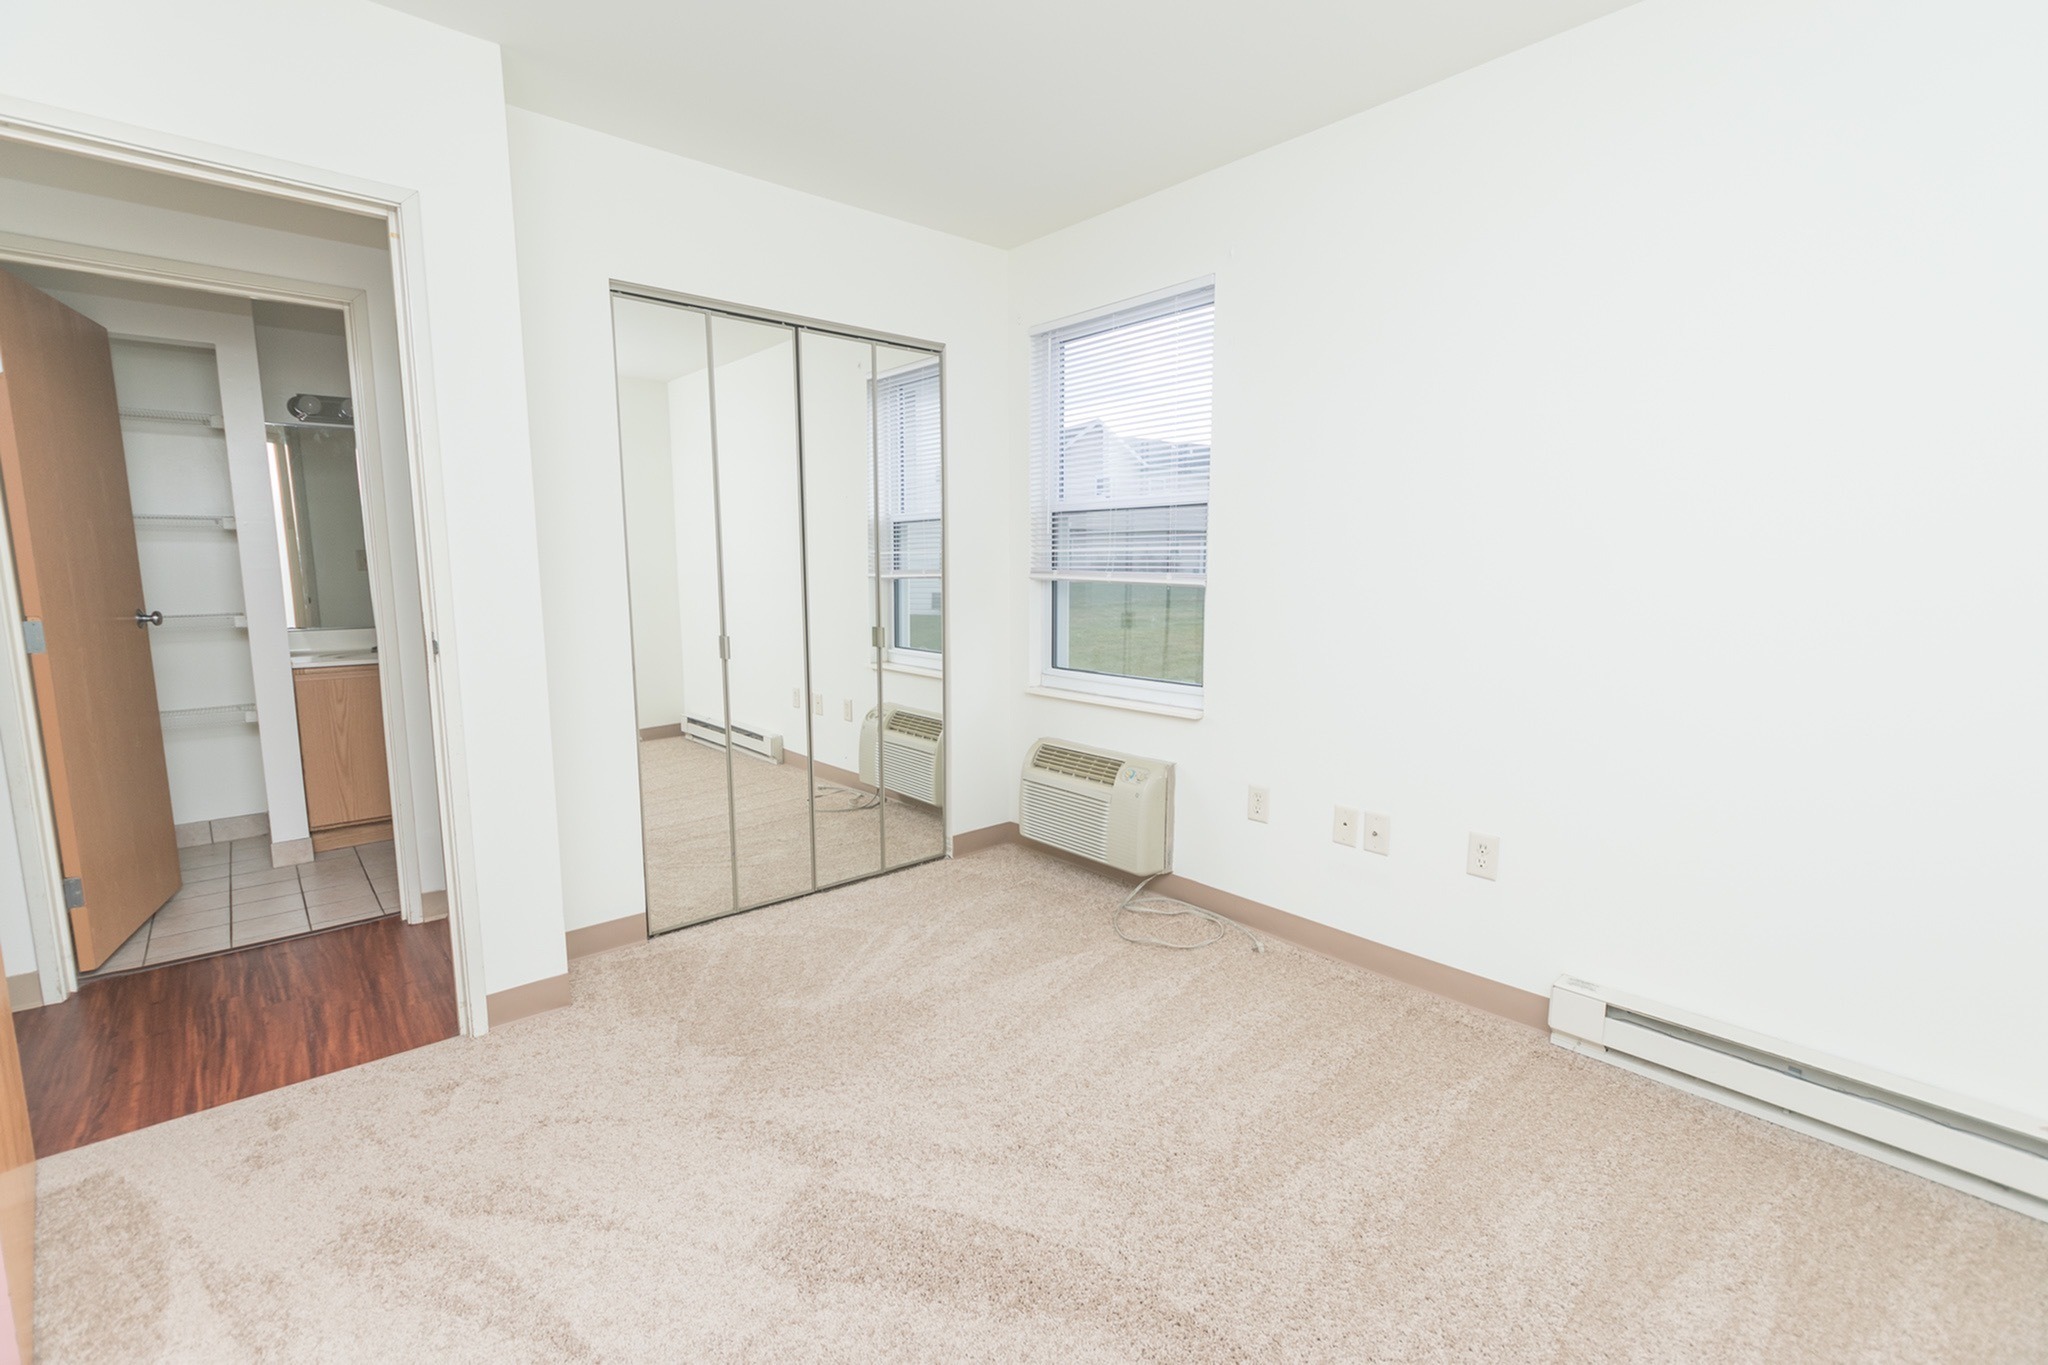 Bedroom with beige carpets, mirror-door closets, and a window.